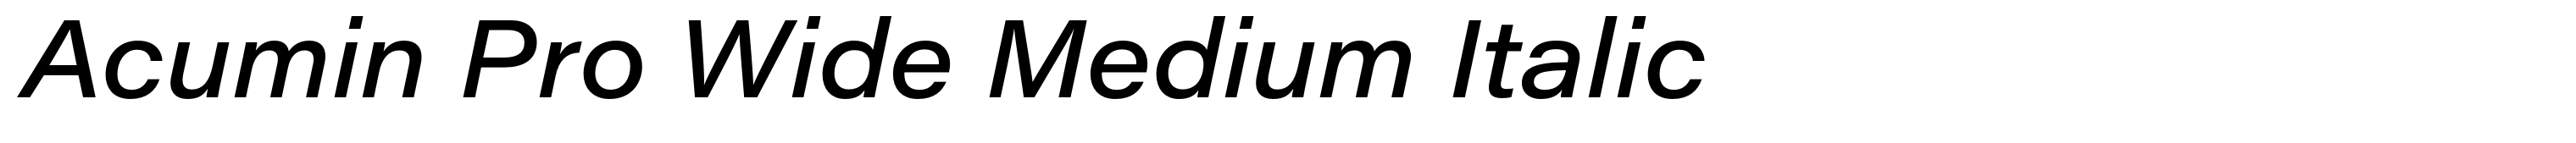 Acumin Pro Wide Medium Italic